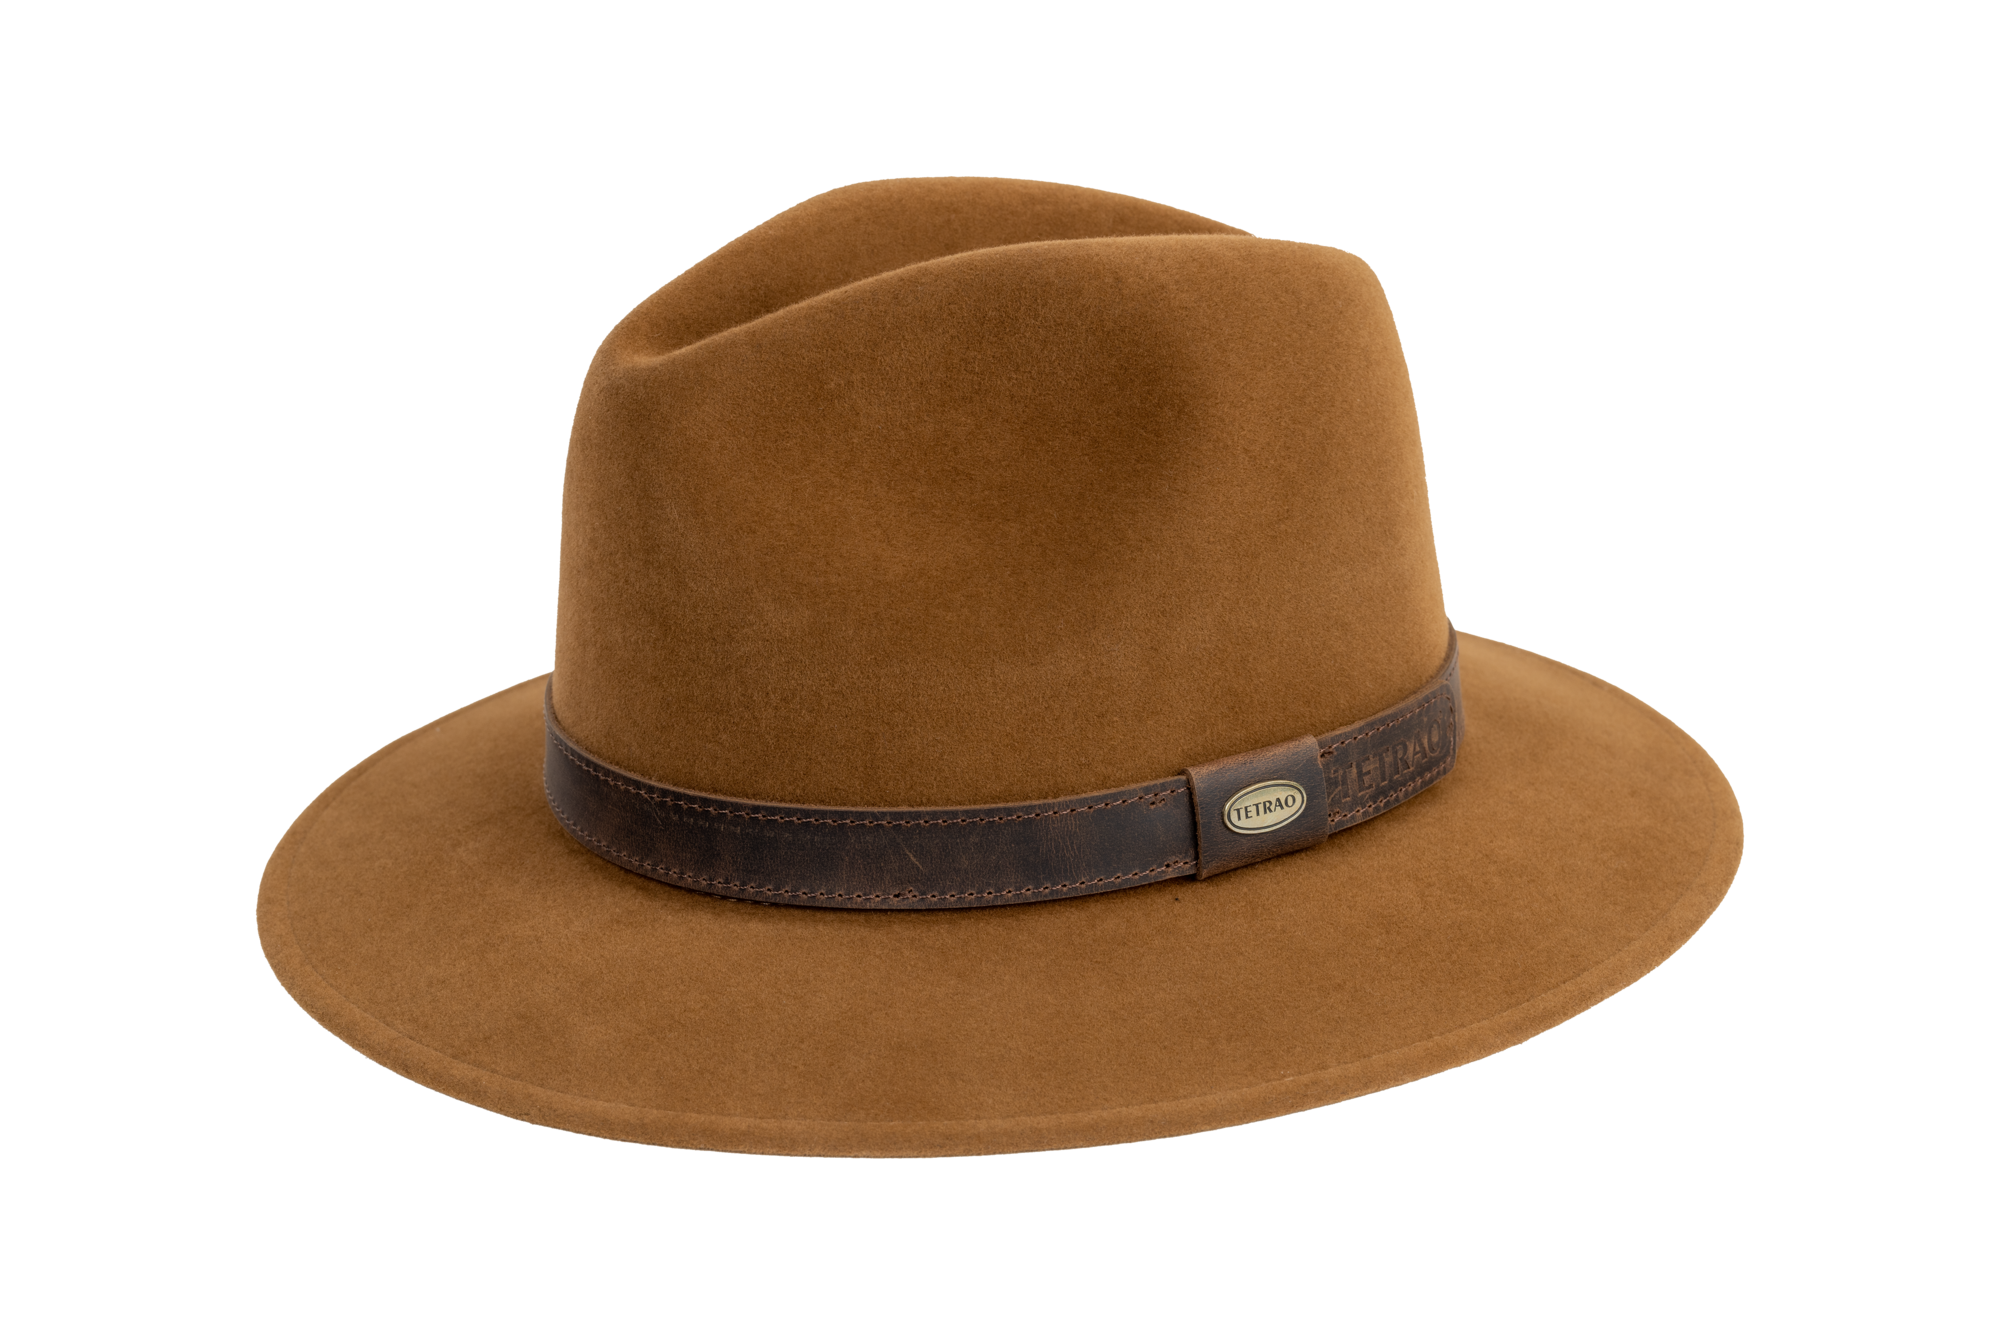 Poľovnícky klobúk TETRAO Exclusive zajac - hnedý  57